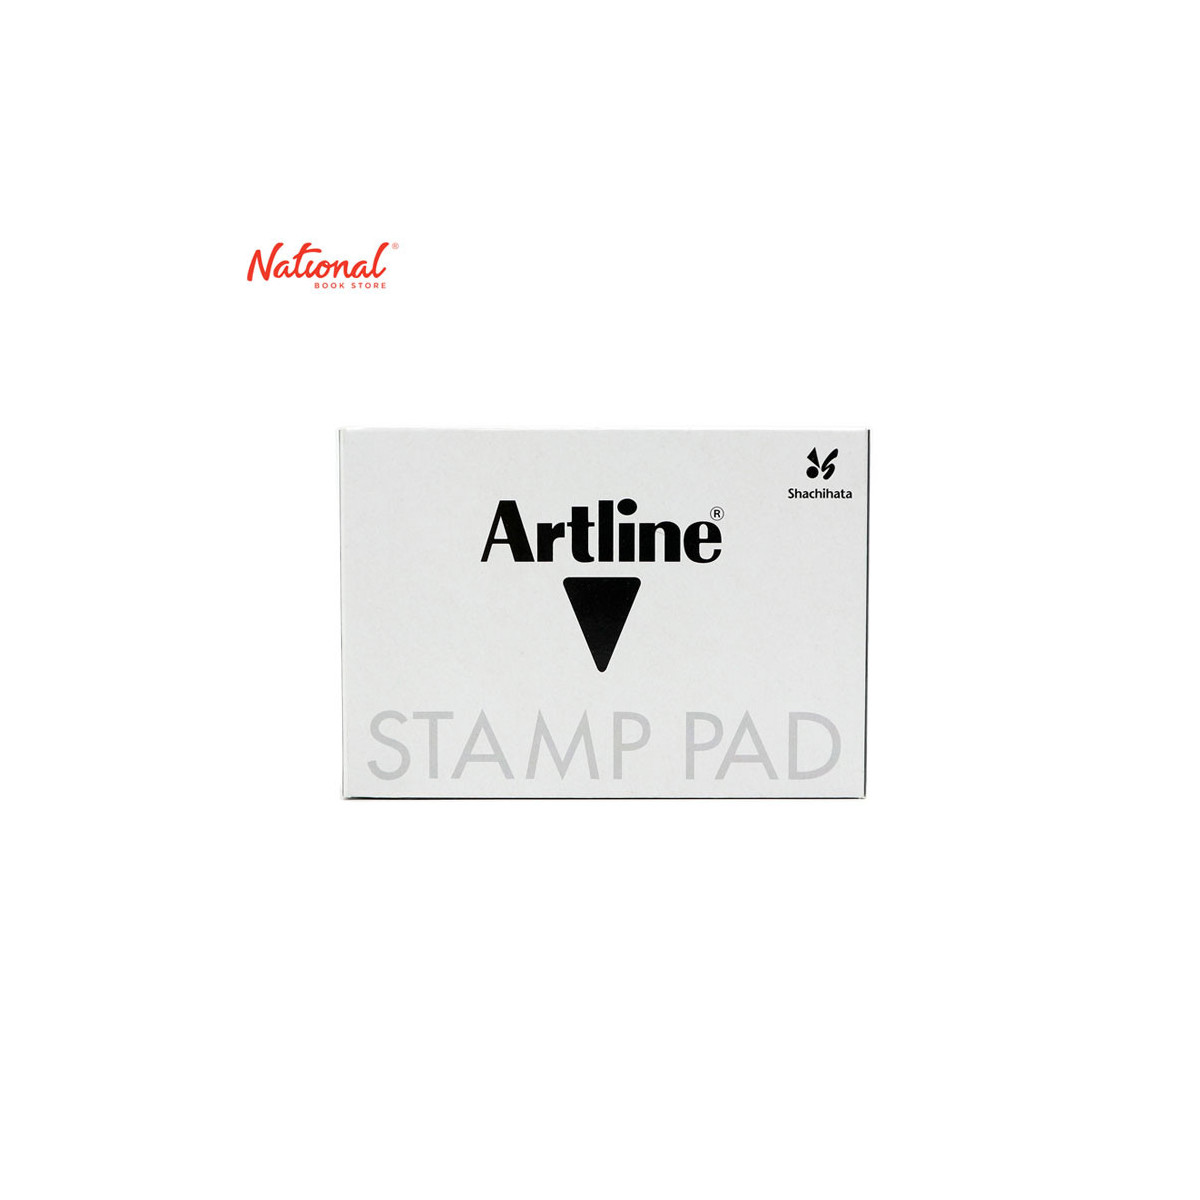 Artline Stamp Pad Ink Black EH-3 – Premio Stationery